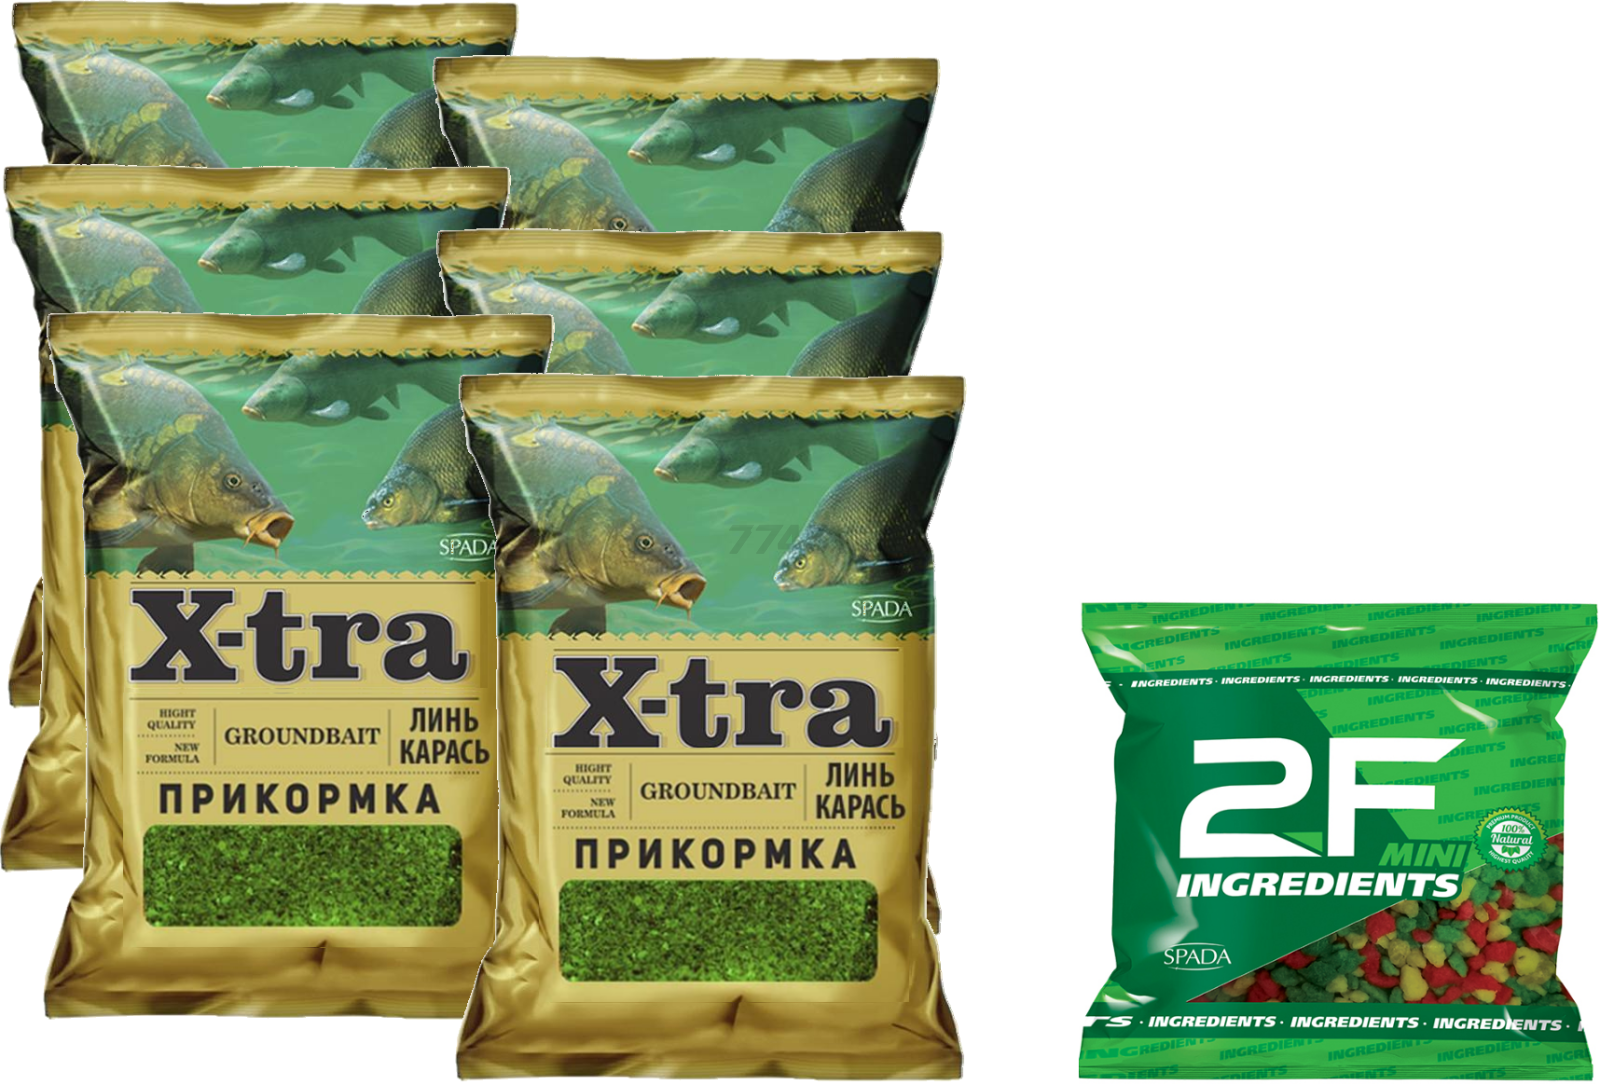 Прикормка рыболовная X-TRA Линь/Карась зеленый марципан 6х0,75 кг + печево микс 0,05 кг (51131-21)